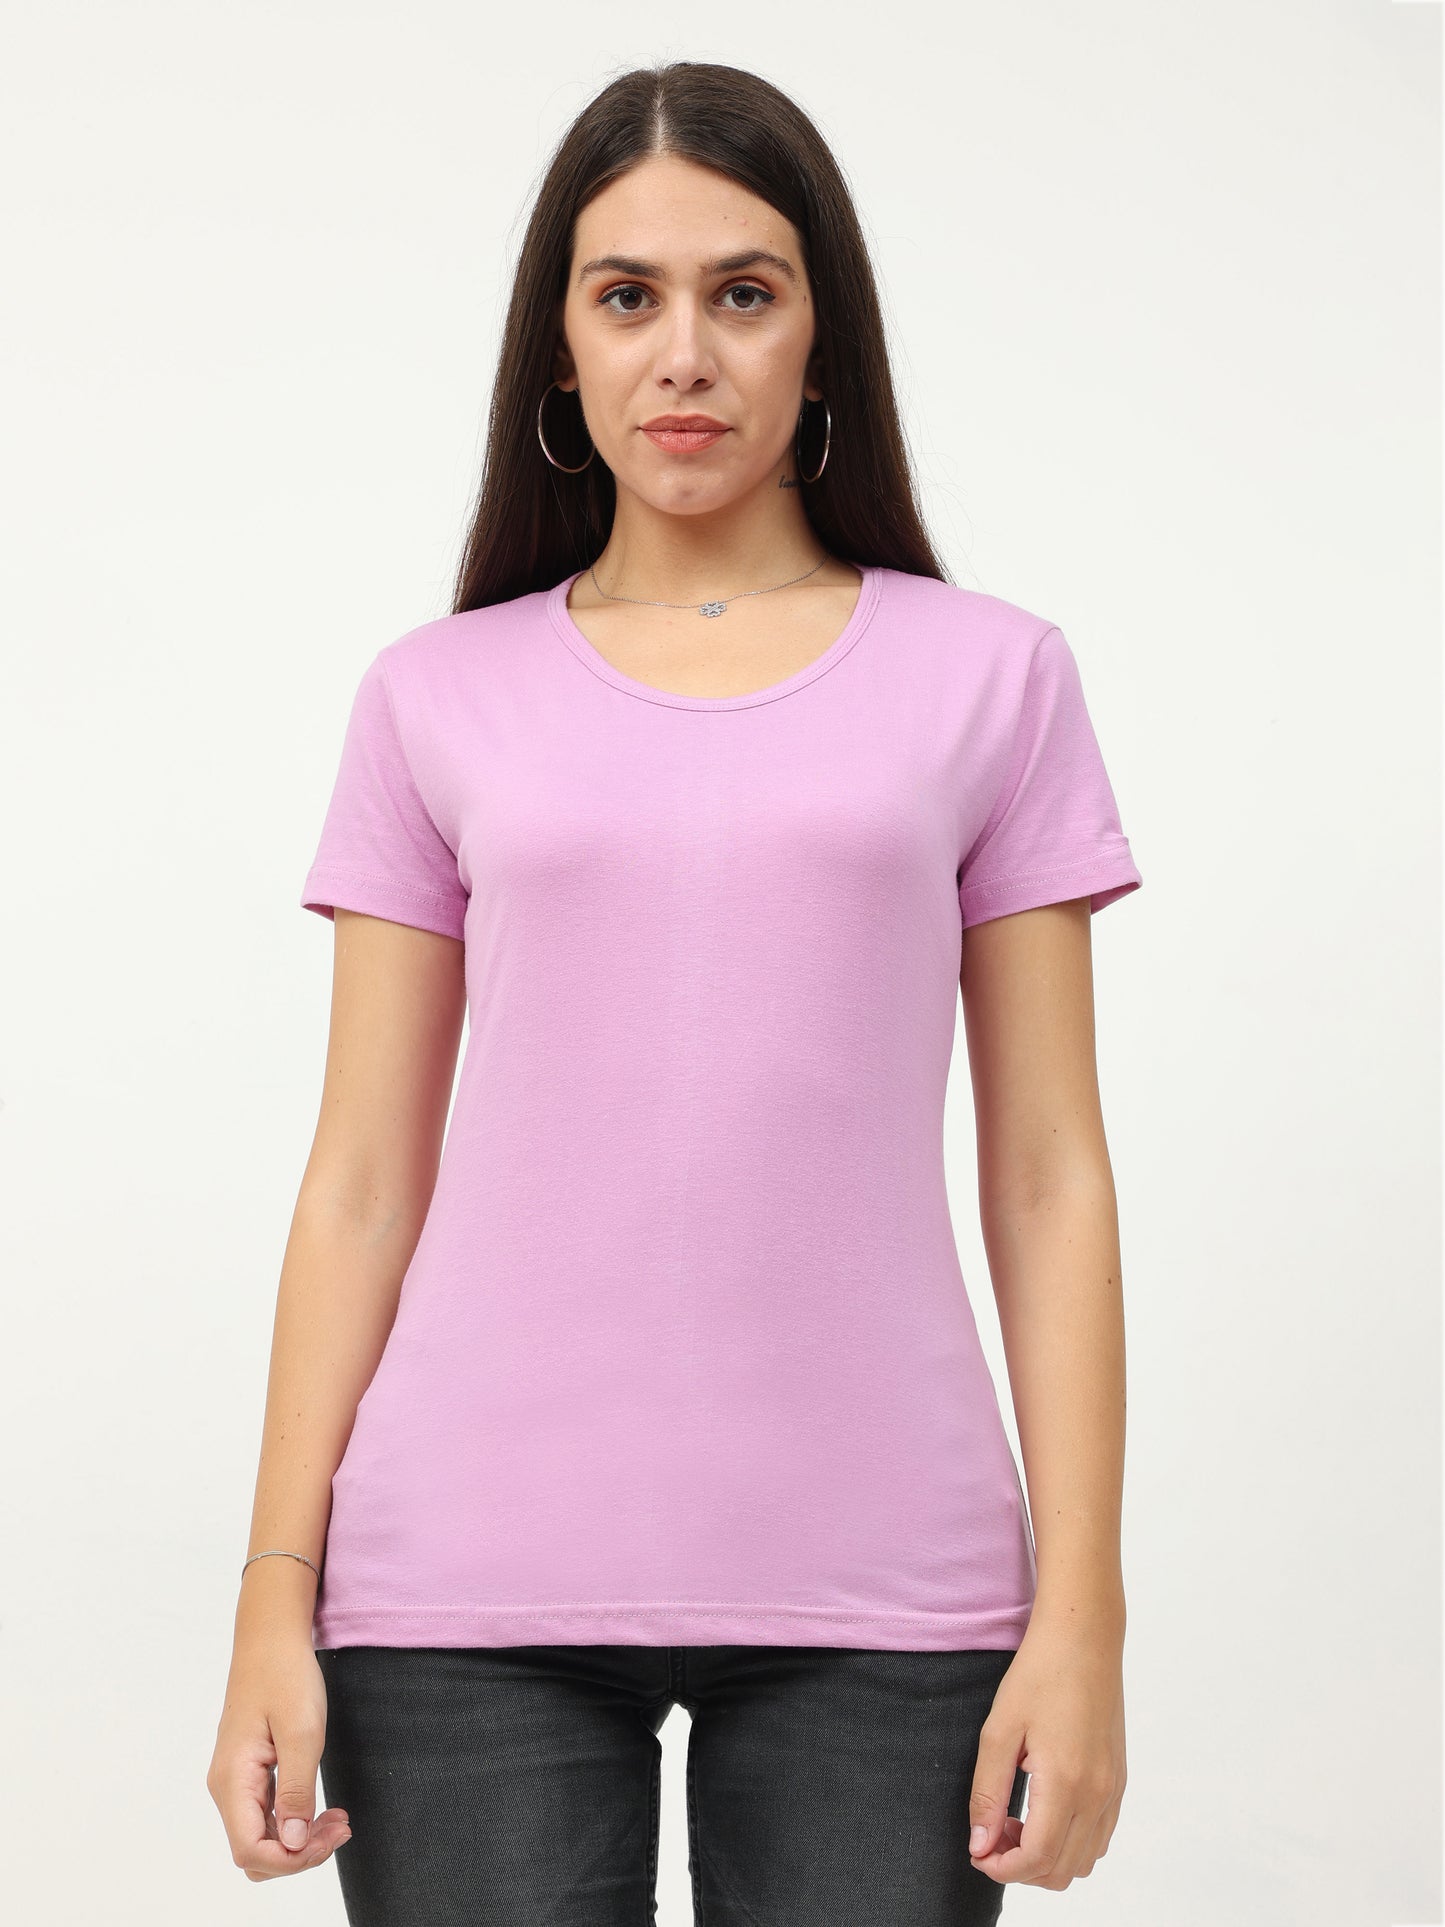 Women's Cotton Plain Round Neck Half Sleeve T-Shirt